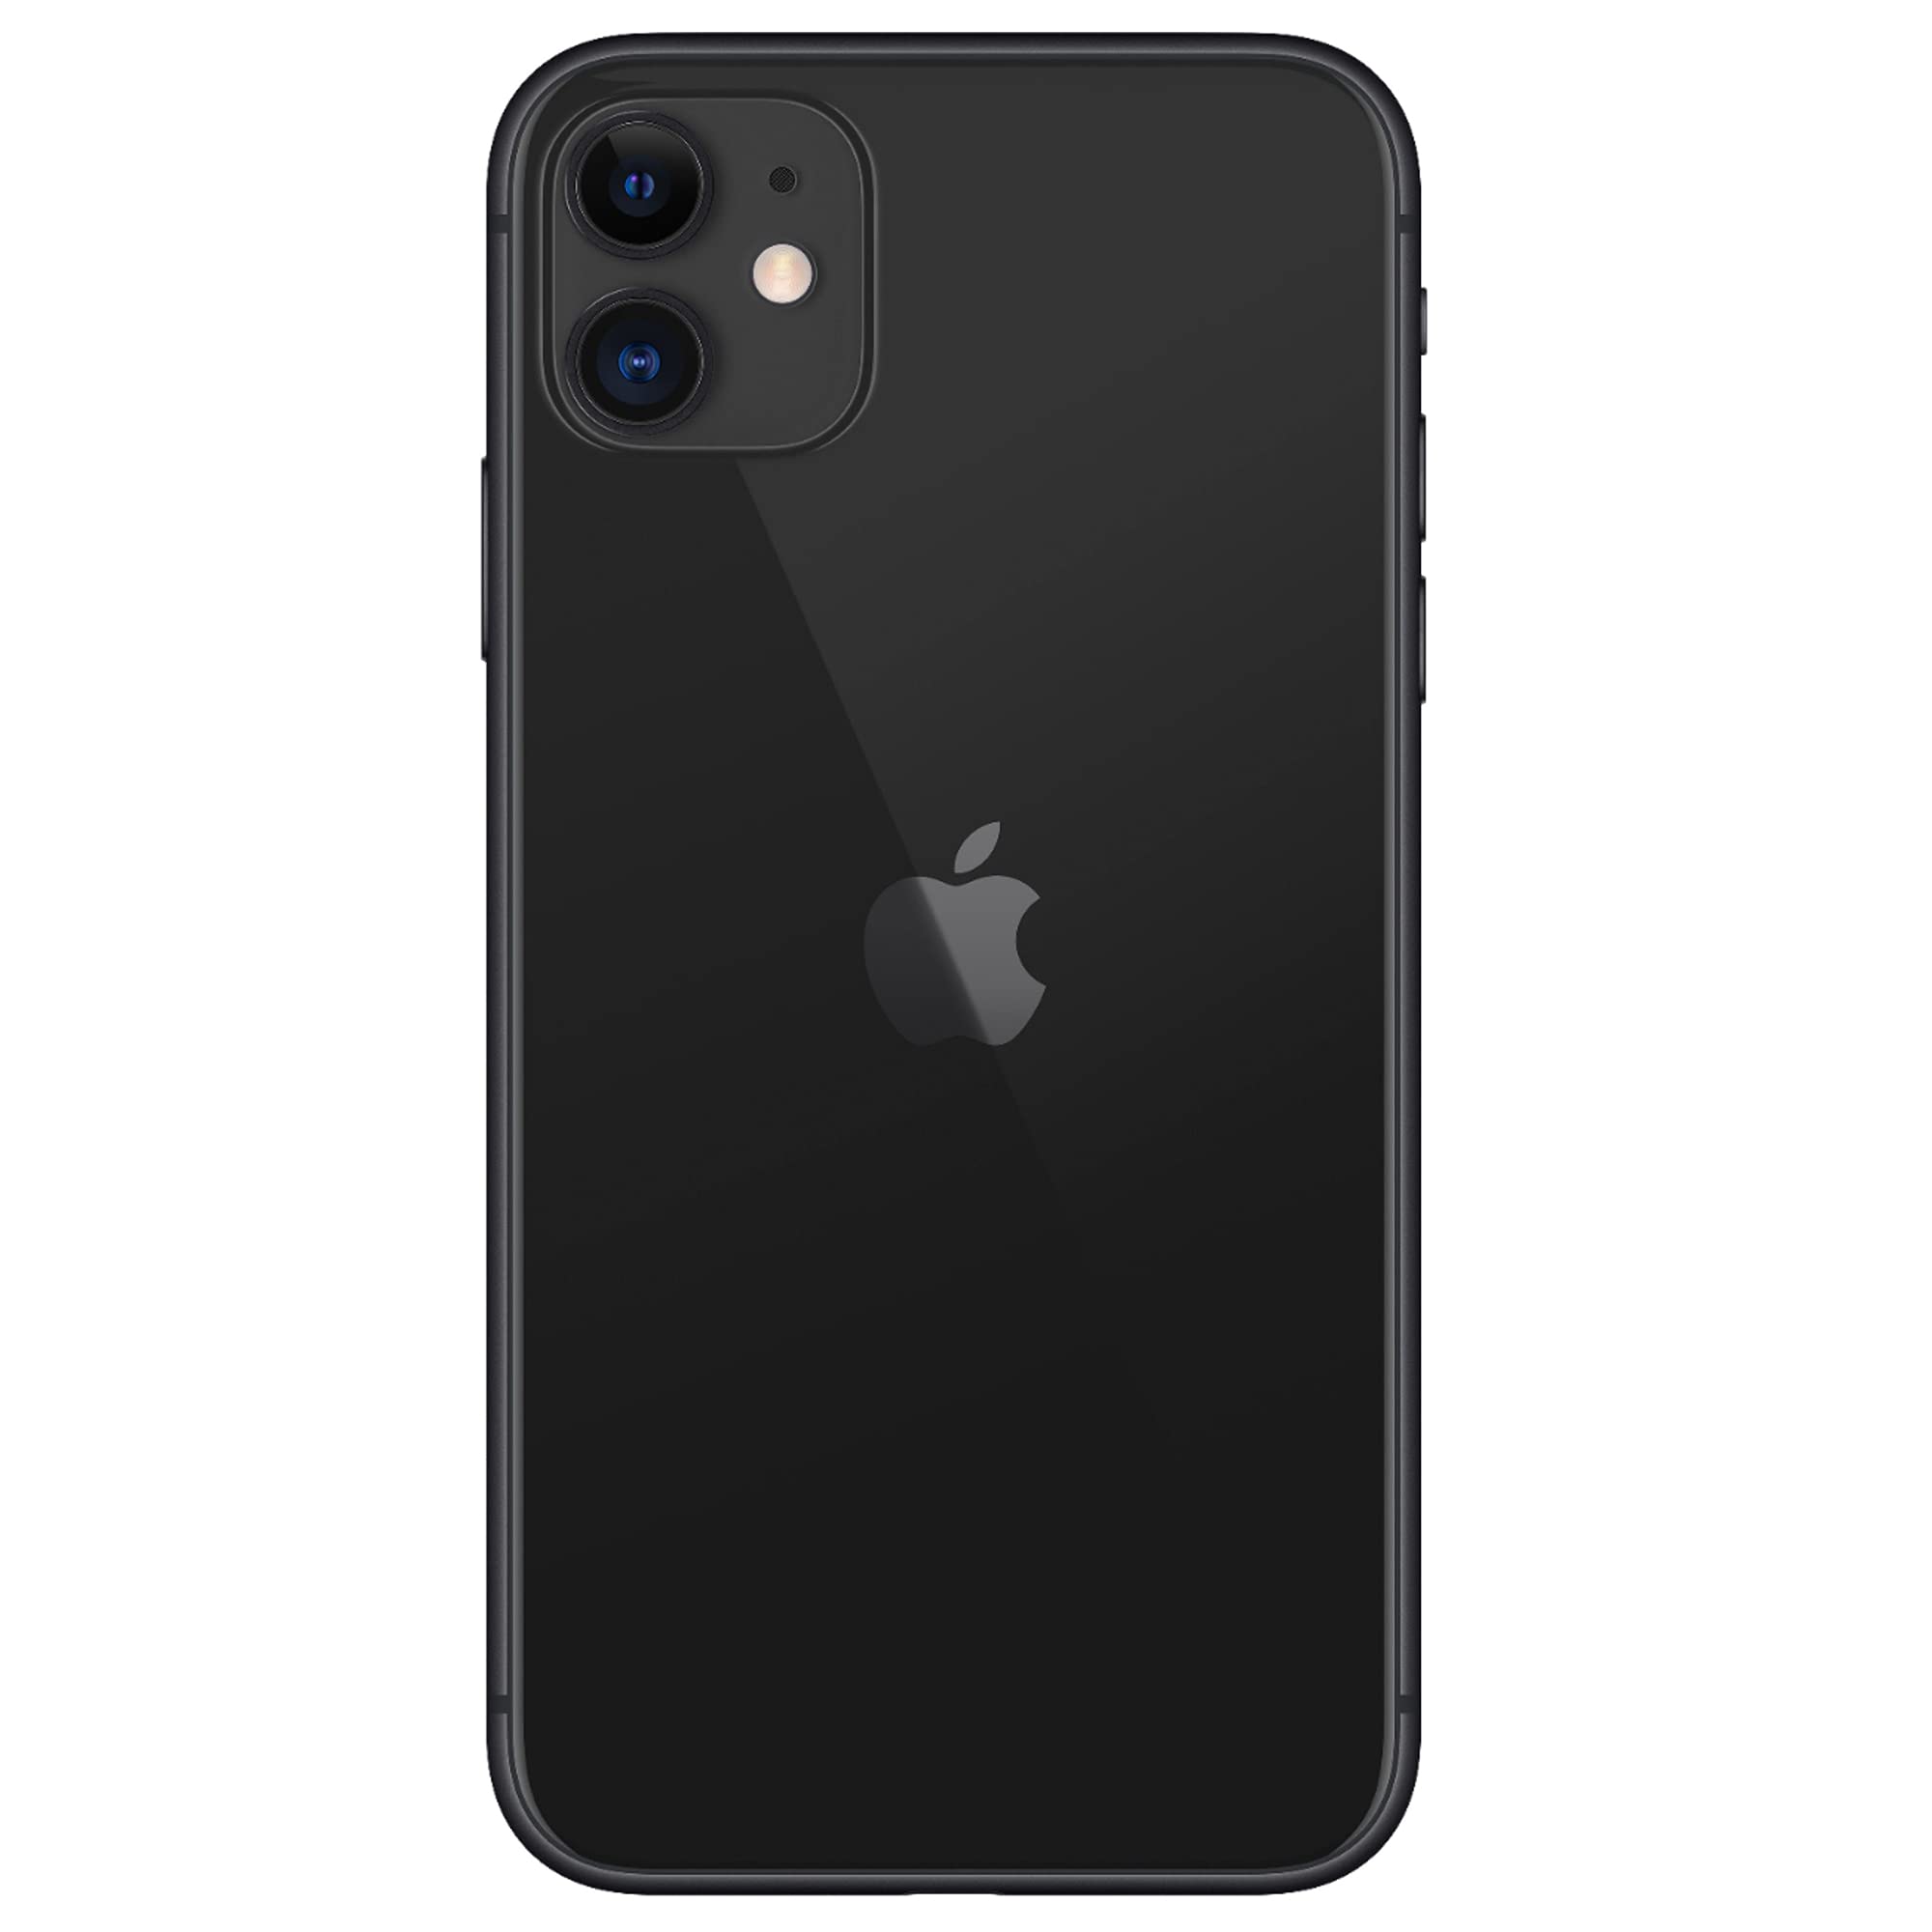 Apple iPhone 11, 64GB, Black - Unlocked (Renewed Premium)